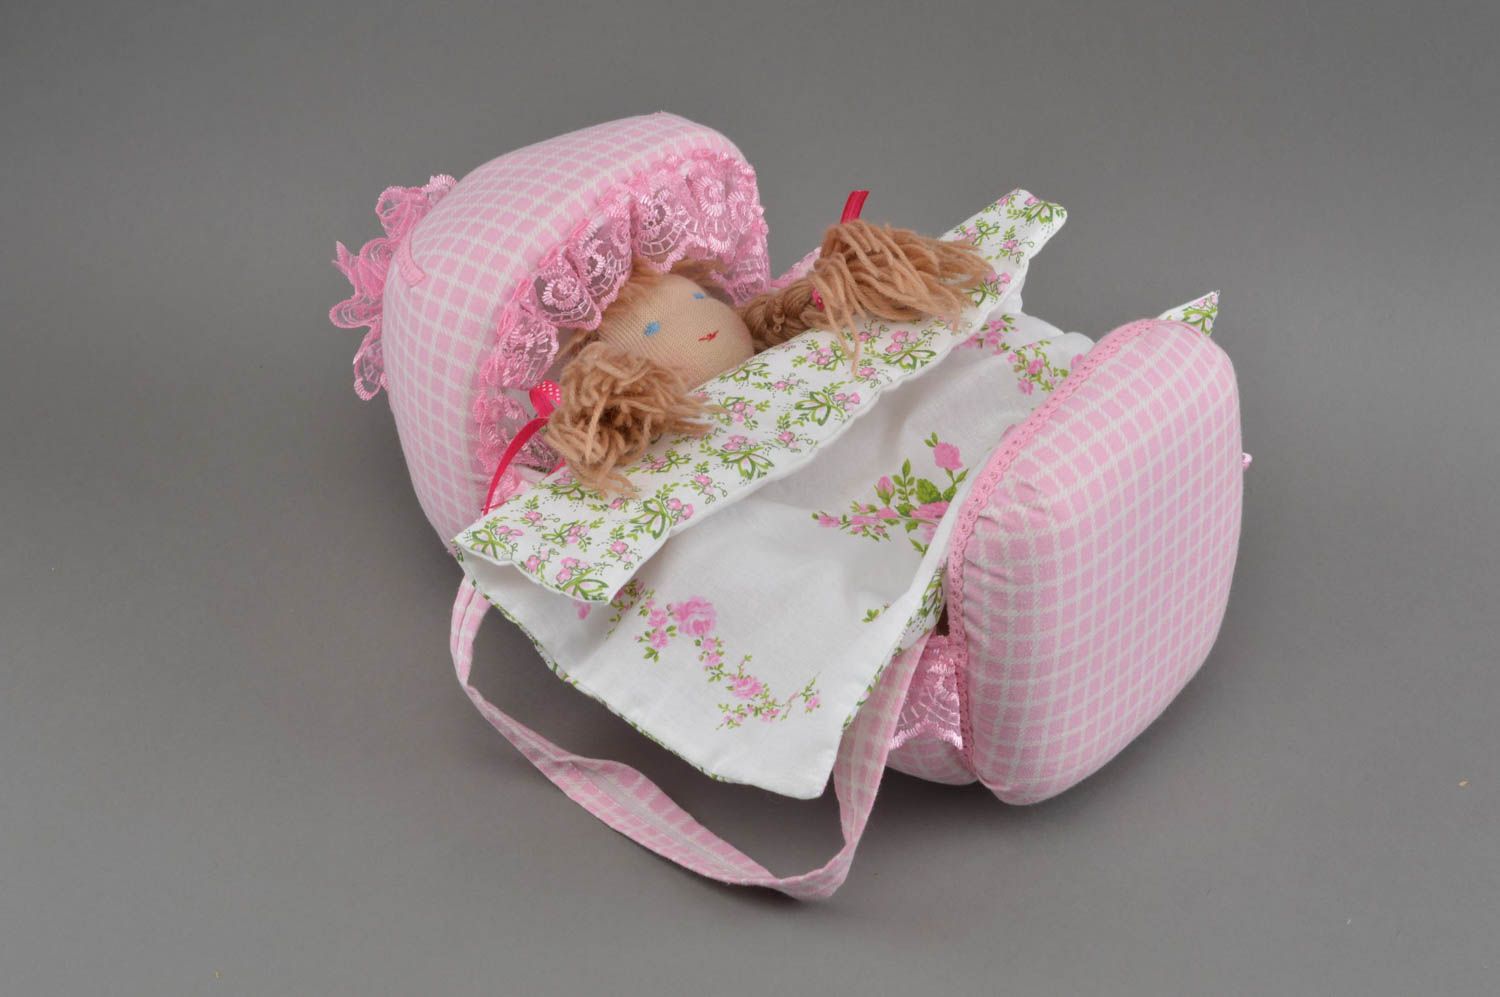 Handmade fabric toy doll in cradle stuffed toy in cradle nursery decor ideas photo 1